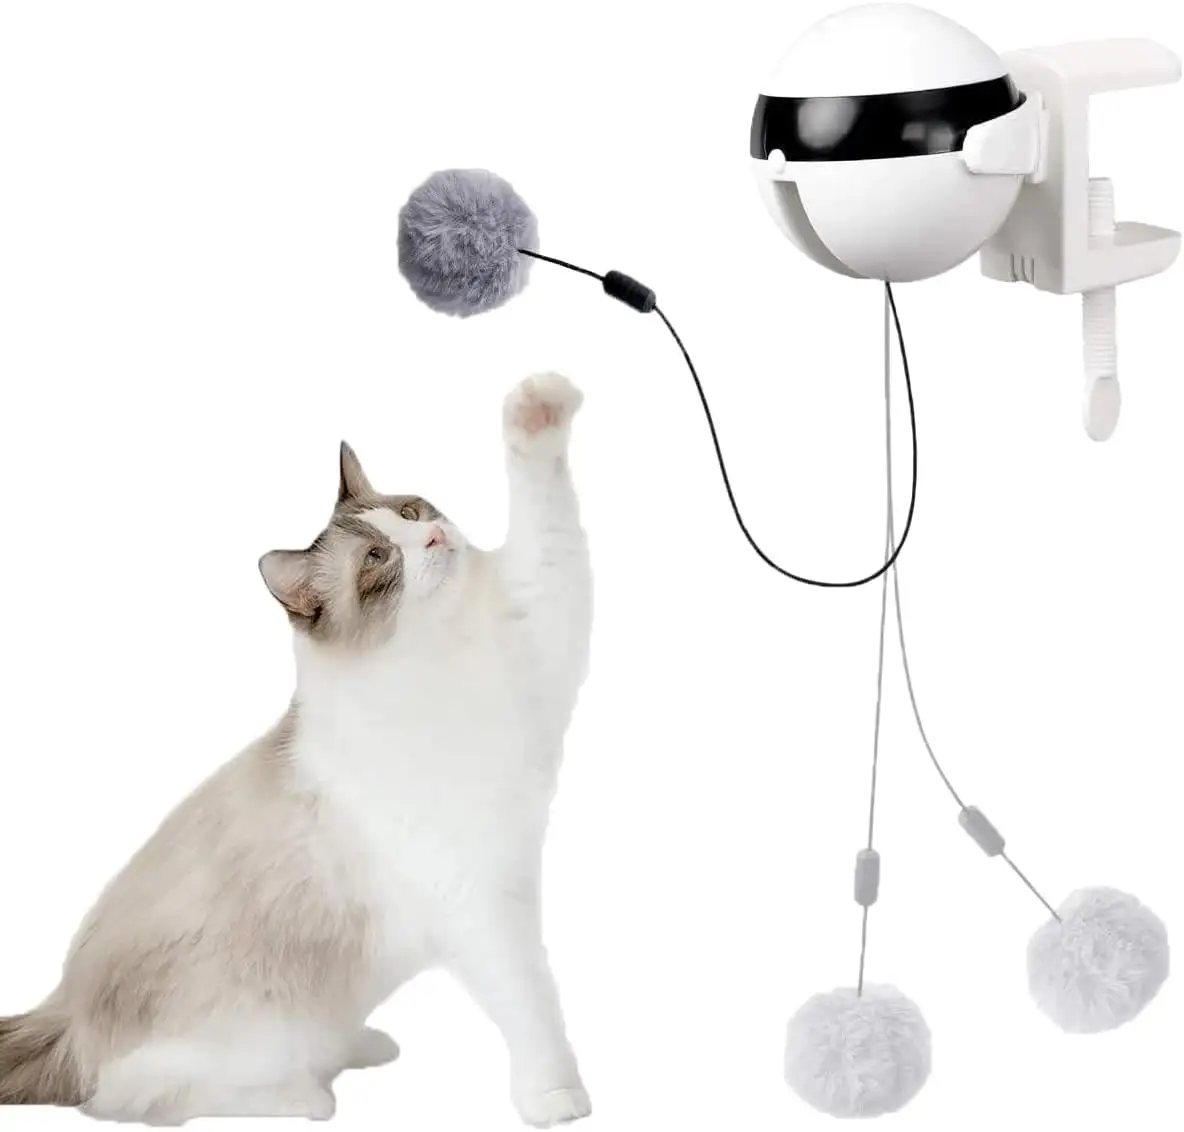 Juguetes interactivos para gatos, simulación de ratones robóticos automáticos, juguete con gatos de plumas, ratón eléctrico, juguete para gatos de interior